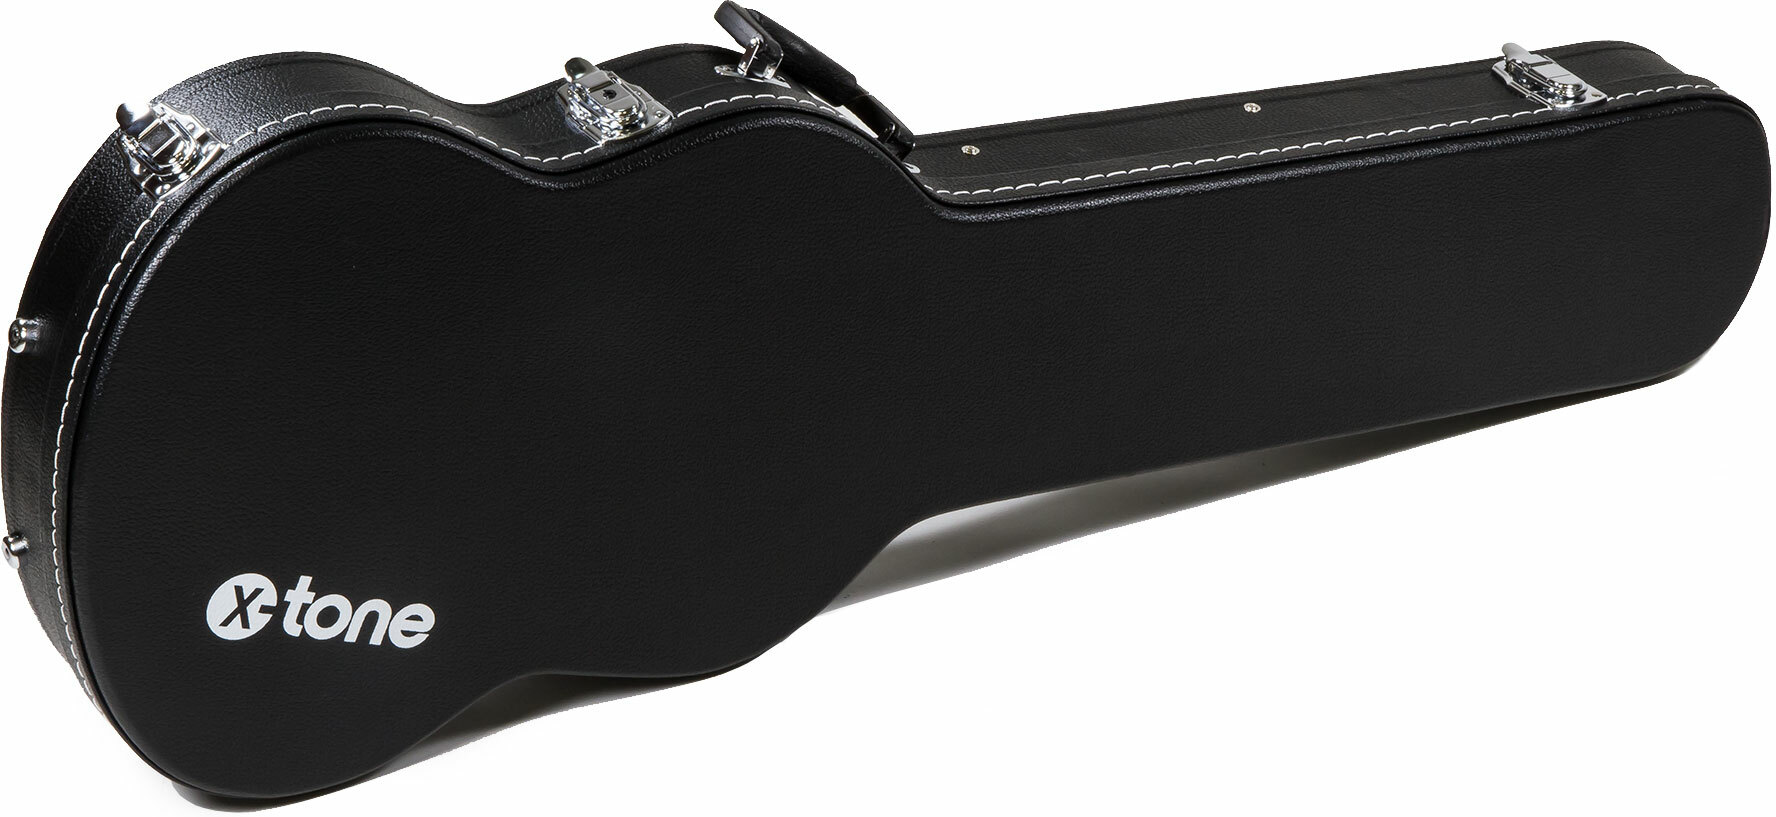 X-tone 1503 Standard Electrique Sg En Forme Black - Maleta para guitarra eléctrica - Main picture